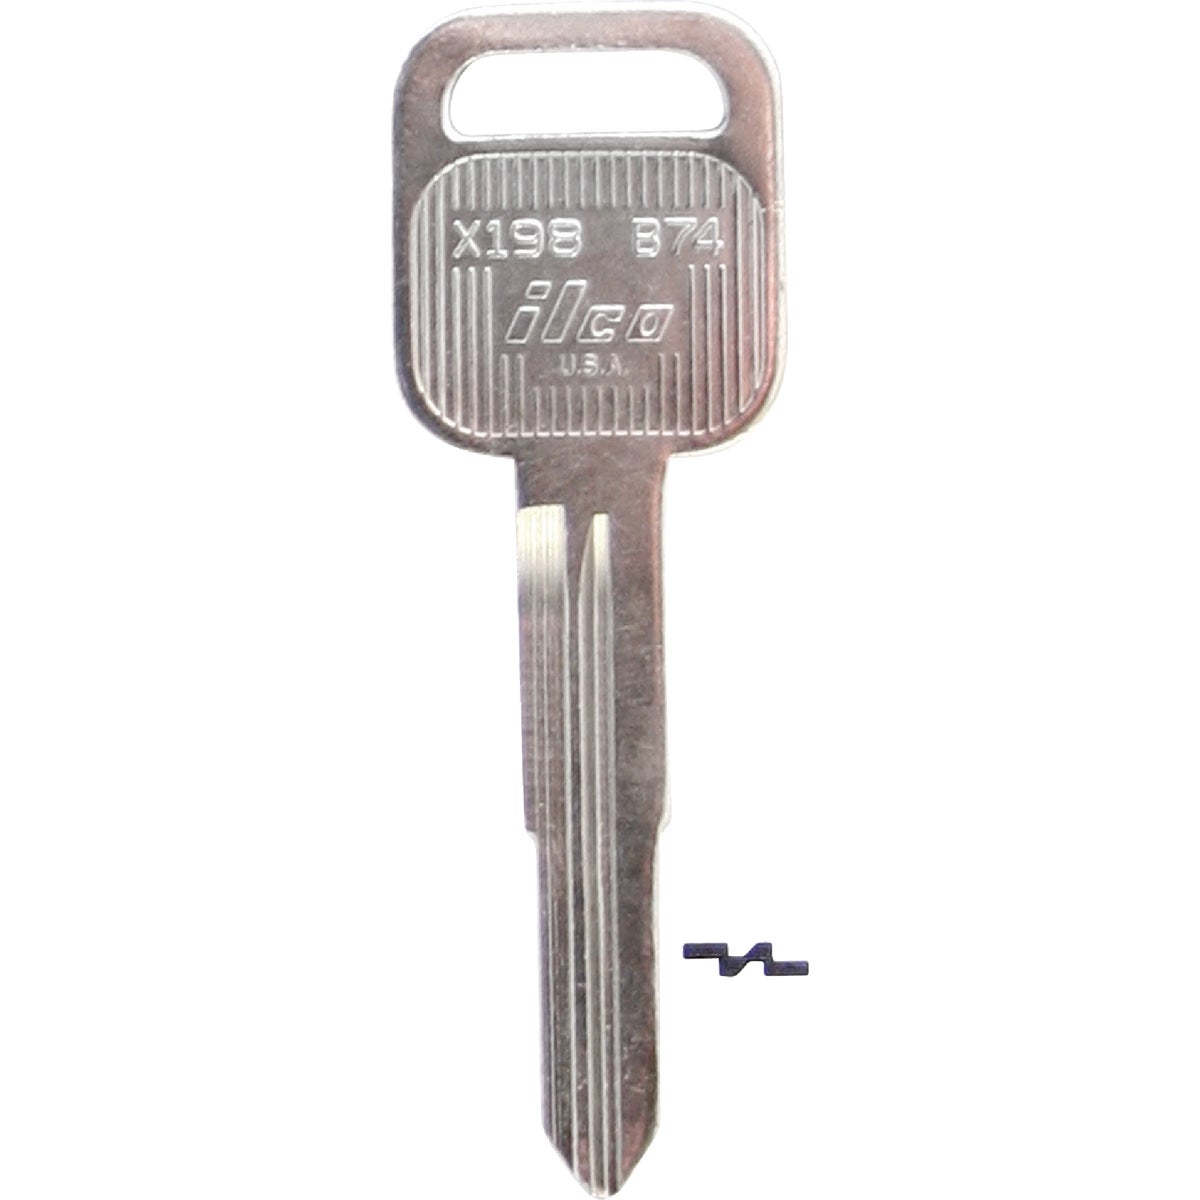 ILCO Honda Nickel Plated Automotive Key, B74 / X198 (10-Pack)